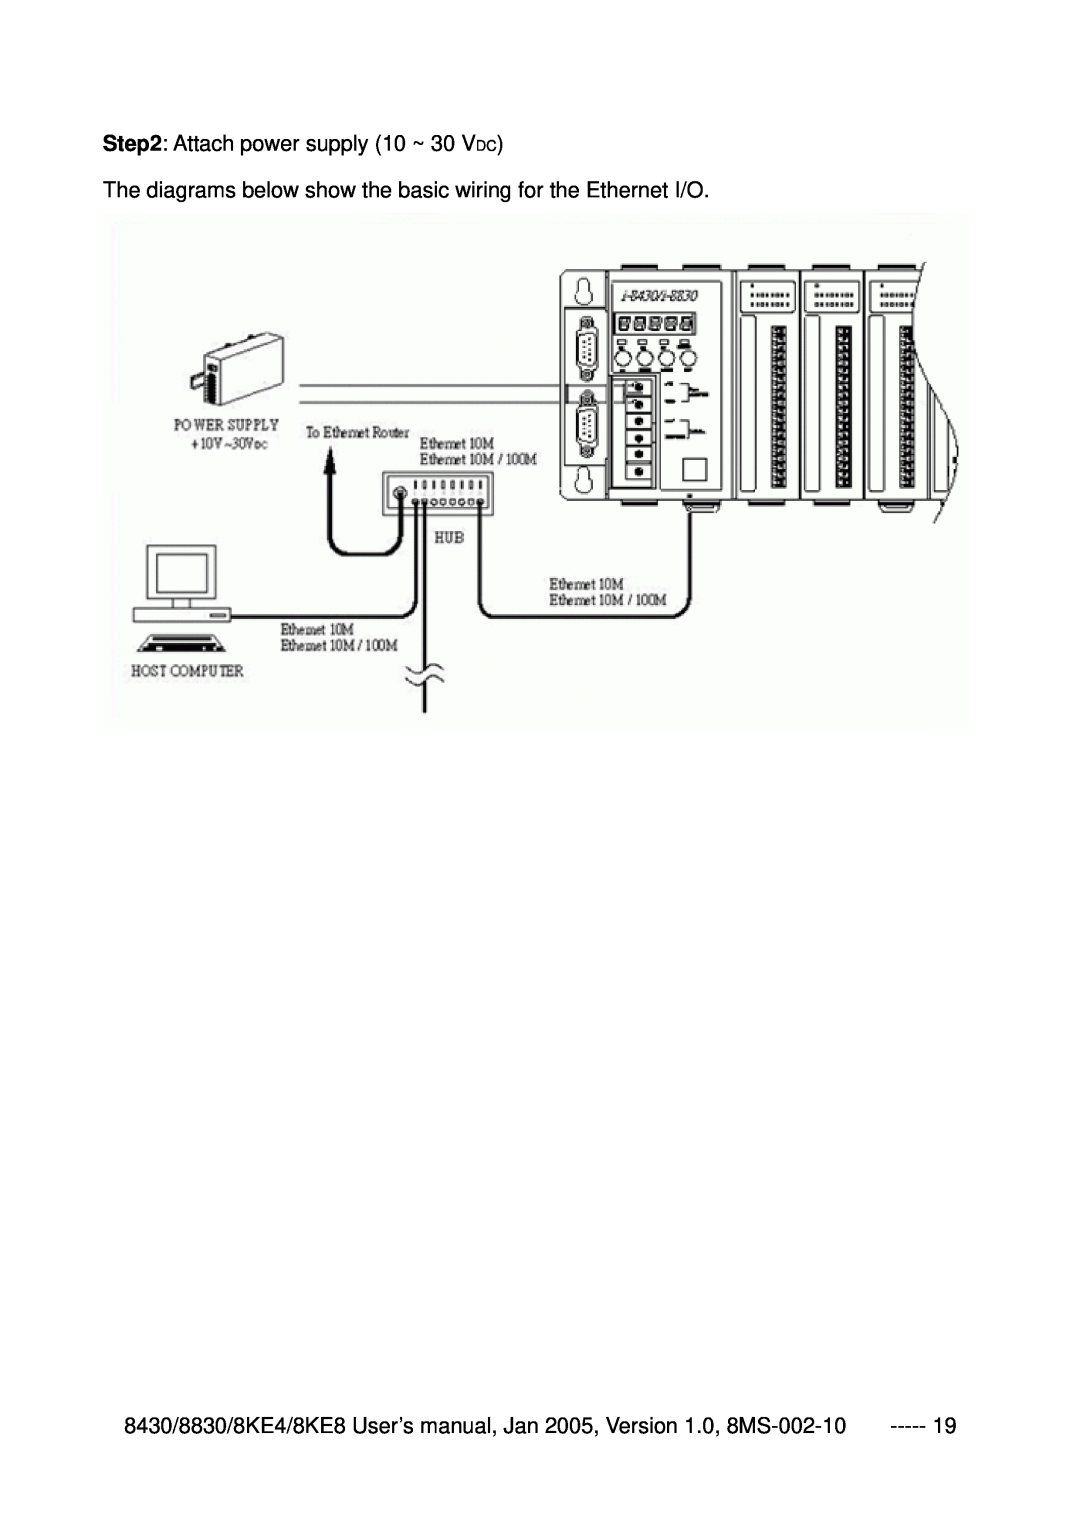 ICP DAS USA 8830, 8KE8, 8KE4 Attach power supply 10 ~ 30 VDC, The diagrams below show the basic wiring for the Ethernet I/O 